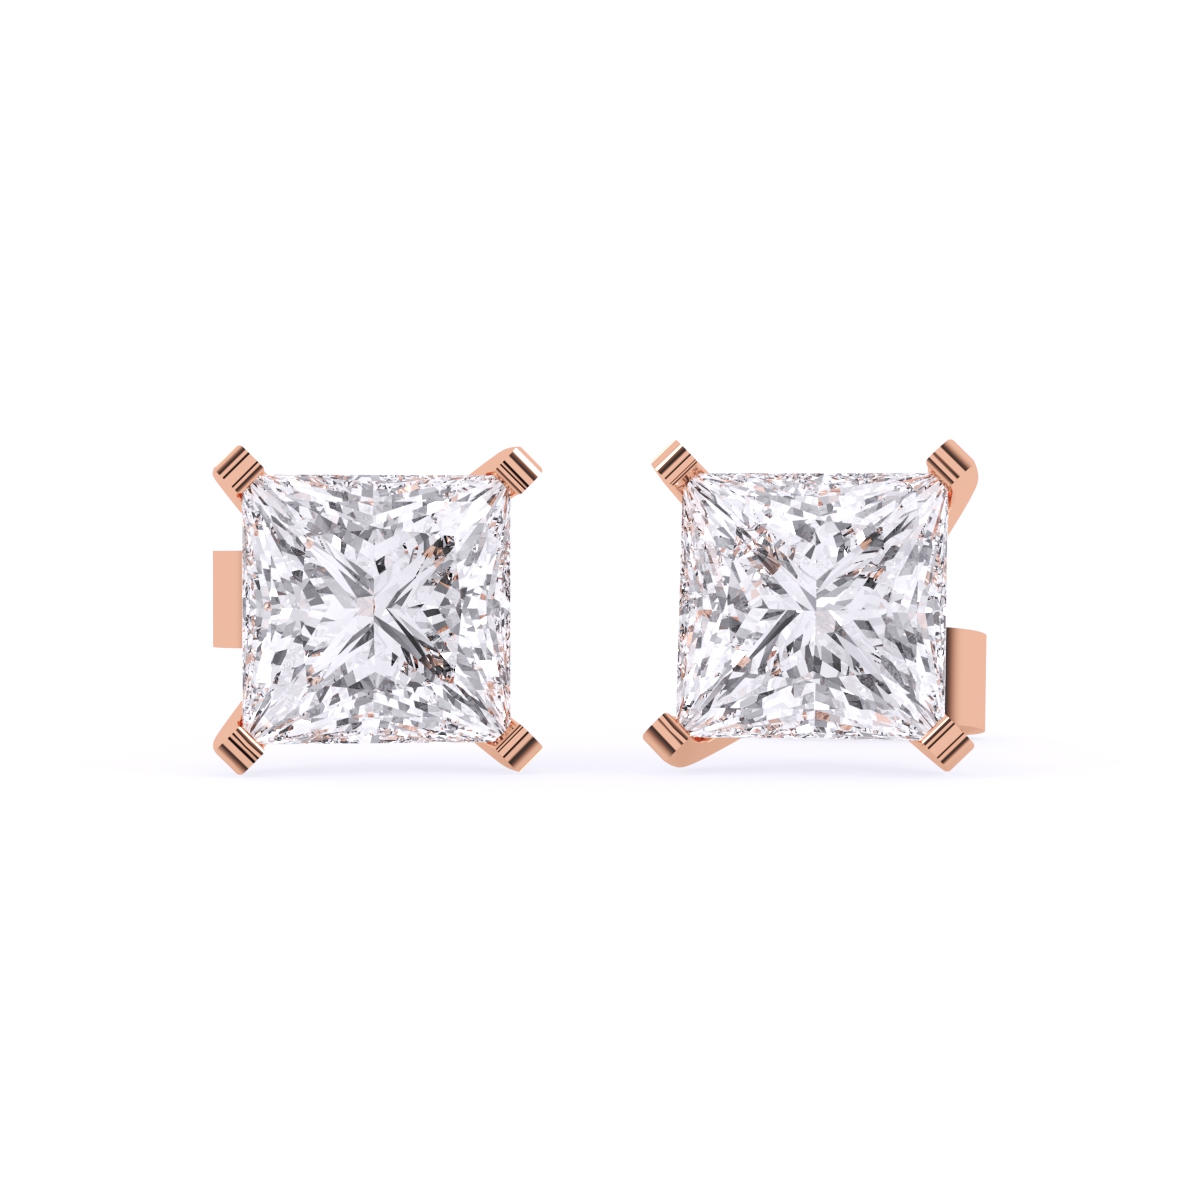 Discover 117+ diamond solitaire earrings princess cut latest